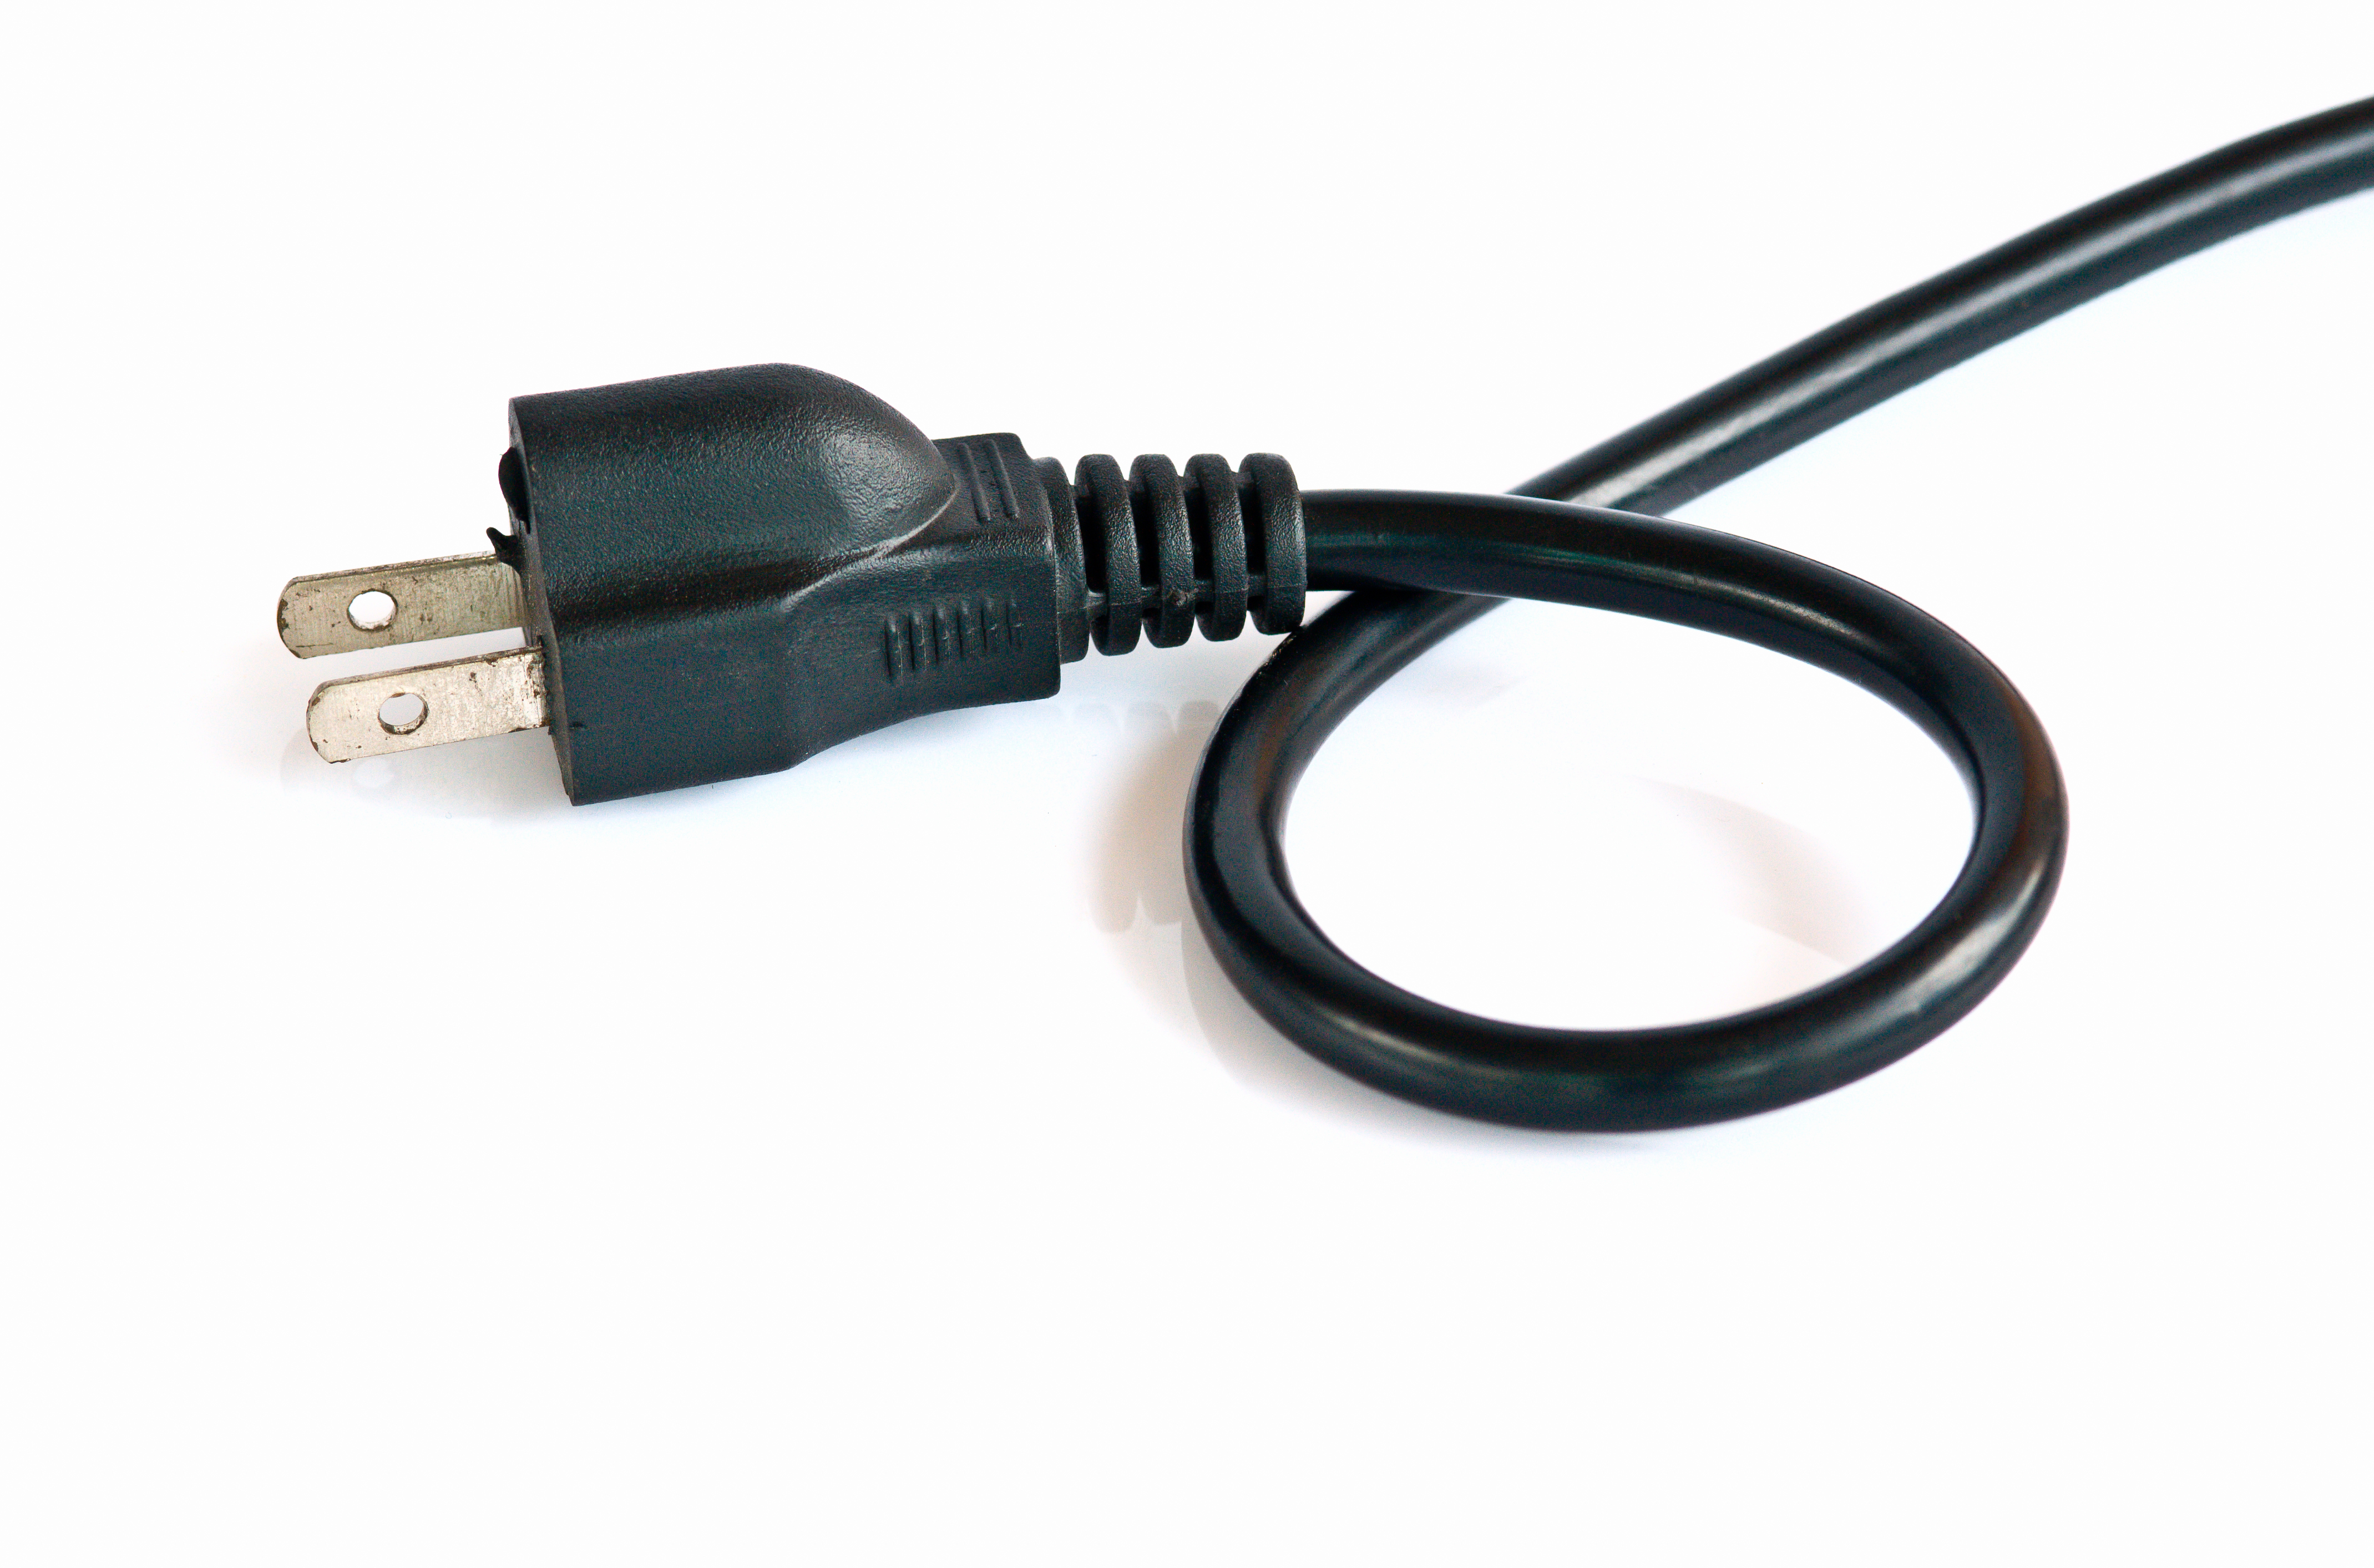 A black electrical cord.